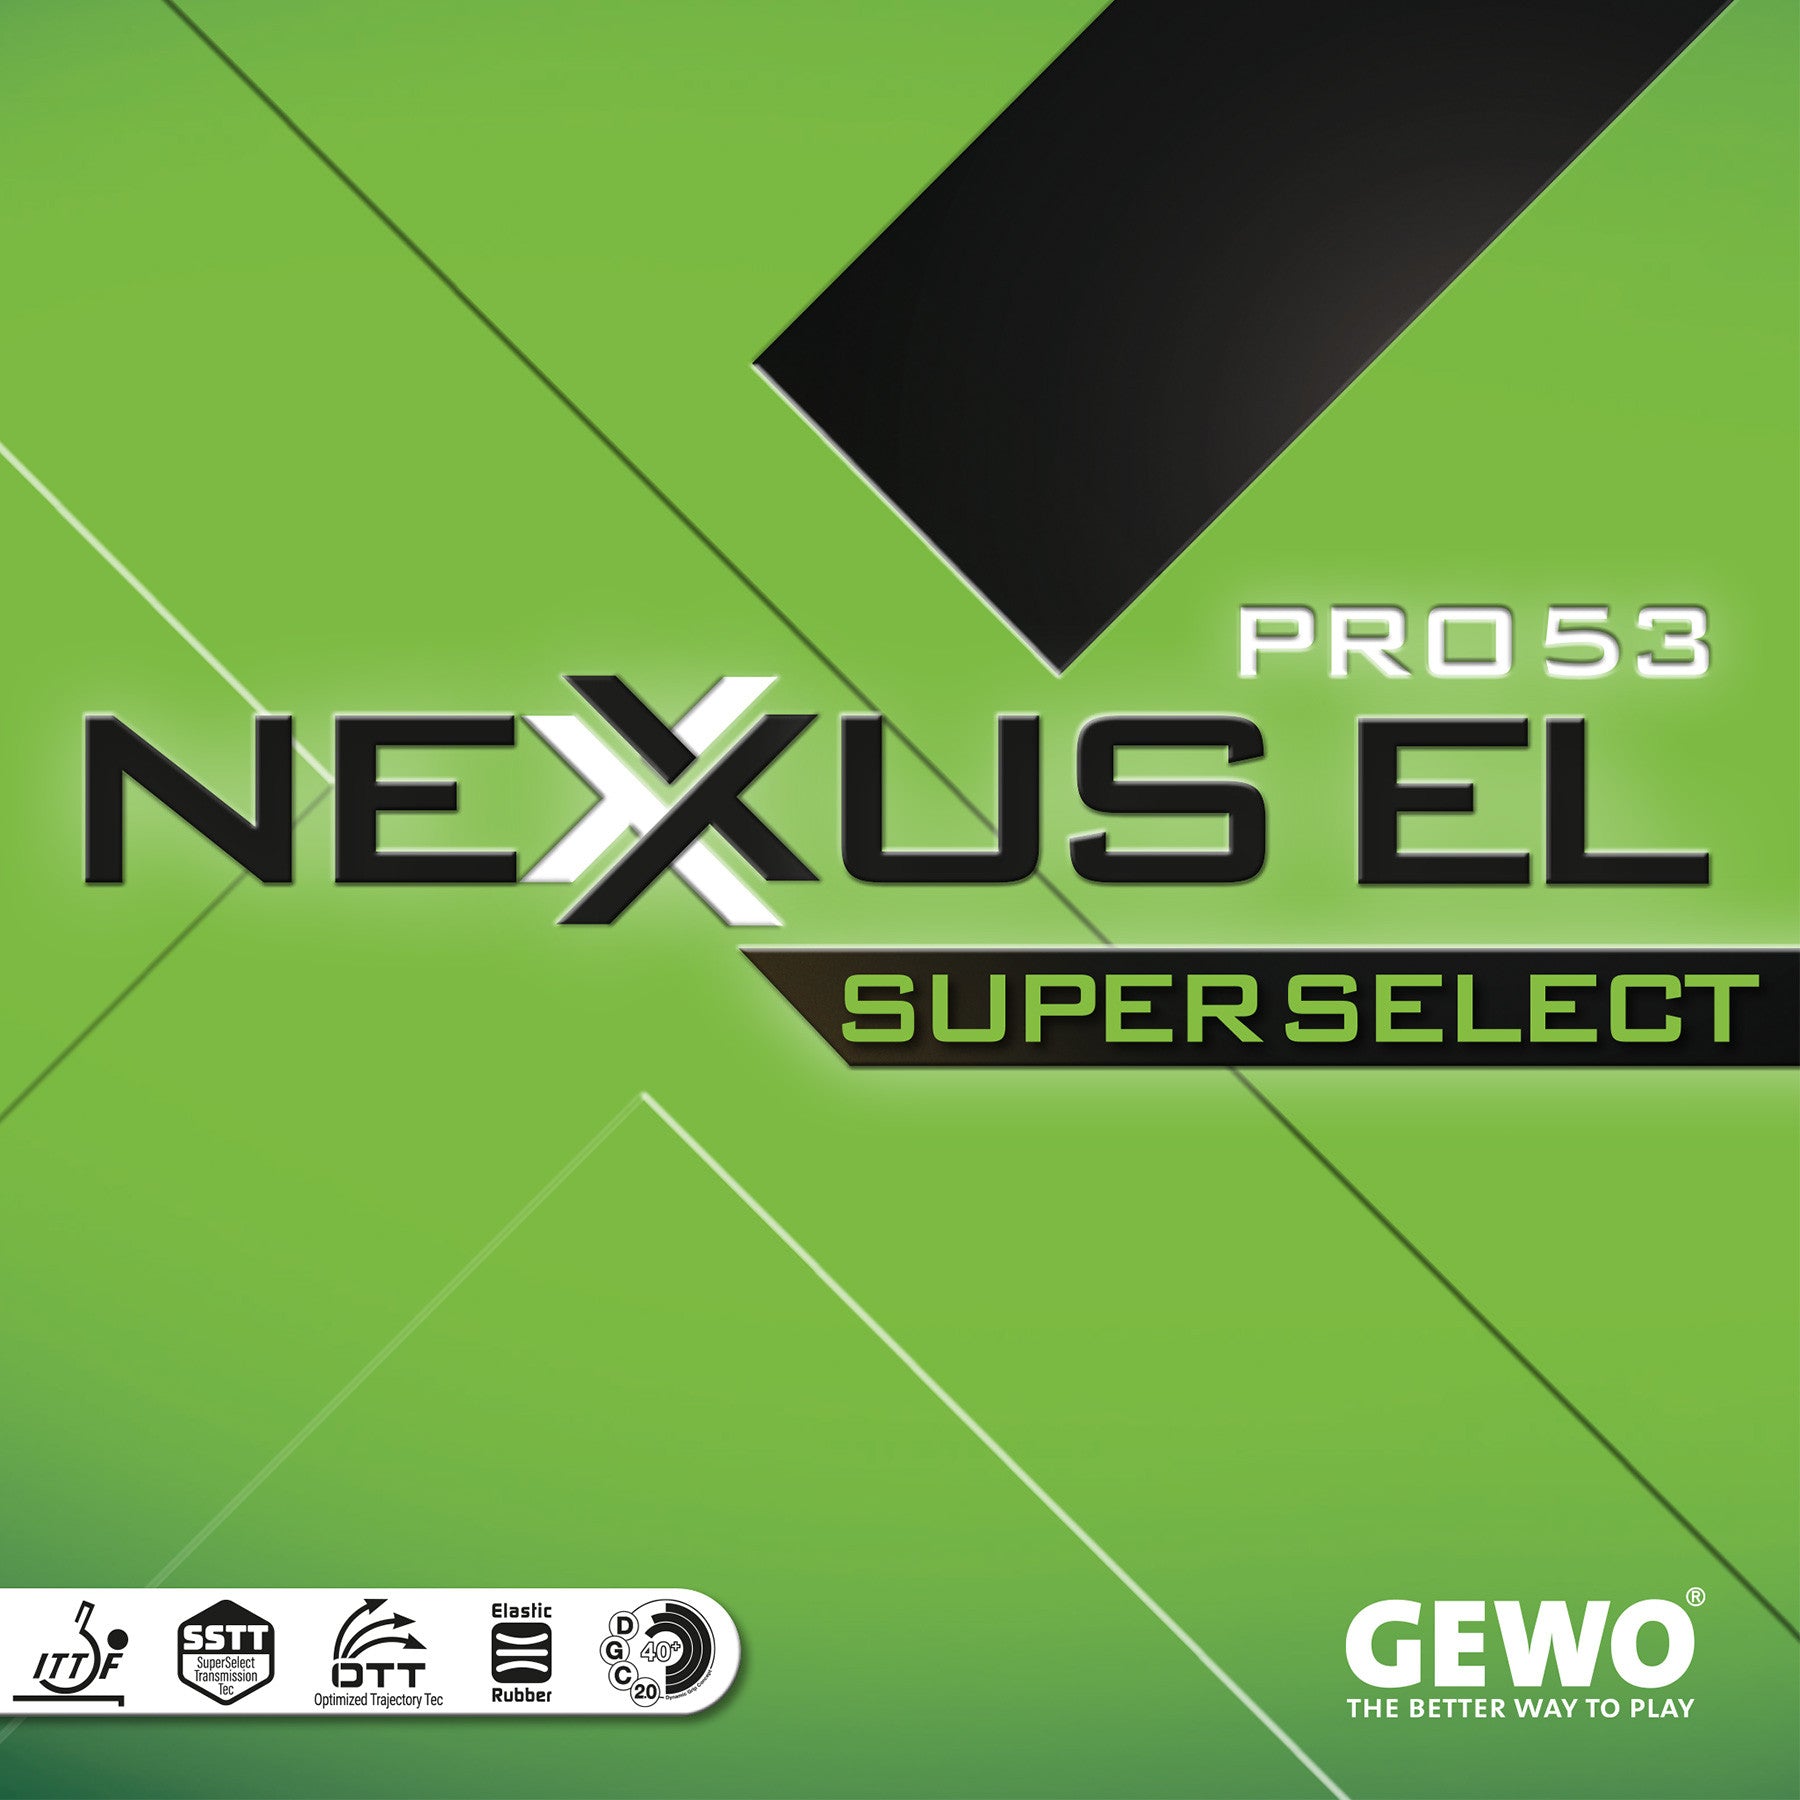 GEWO - NeXXus EL Pro 53 | Super Select